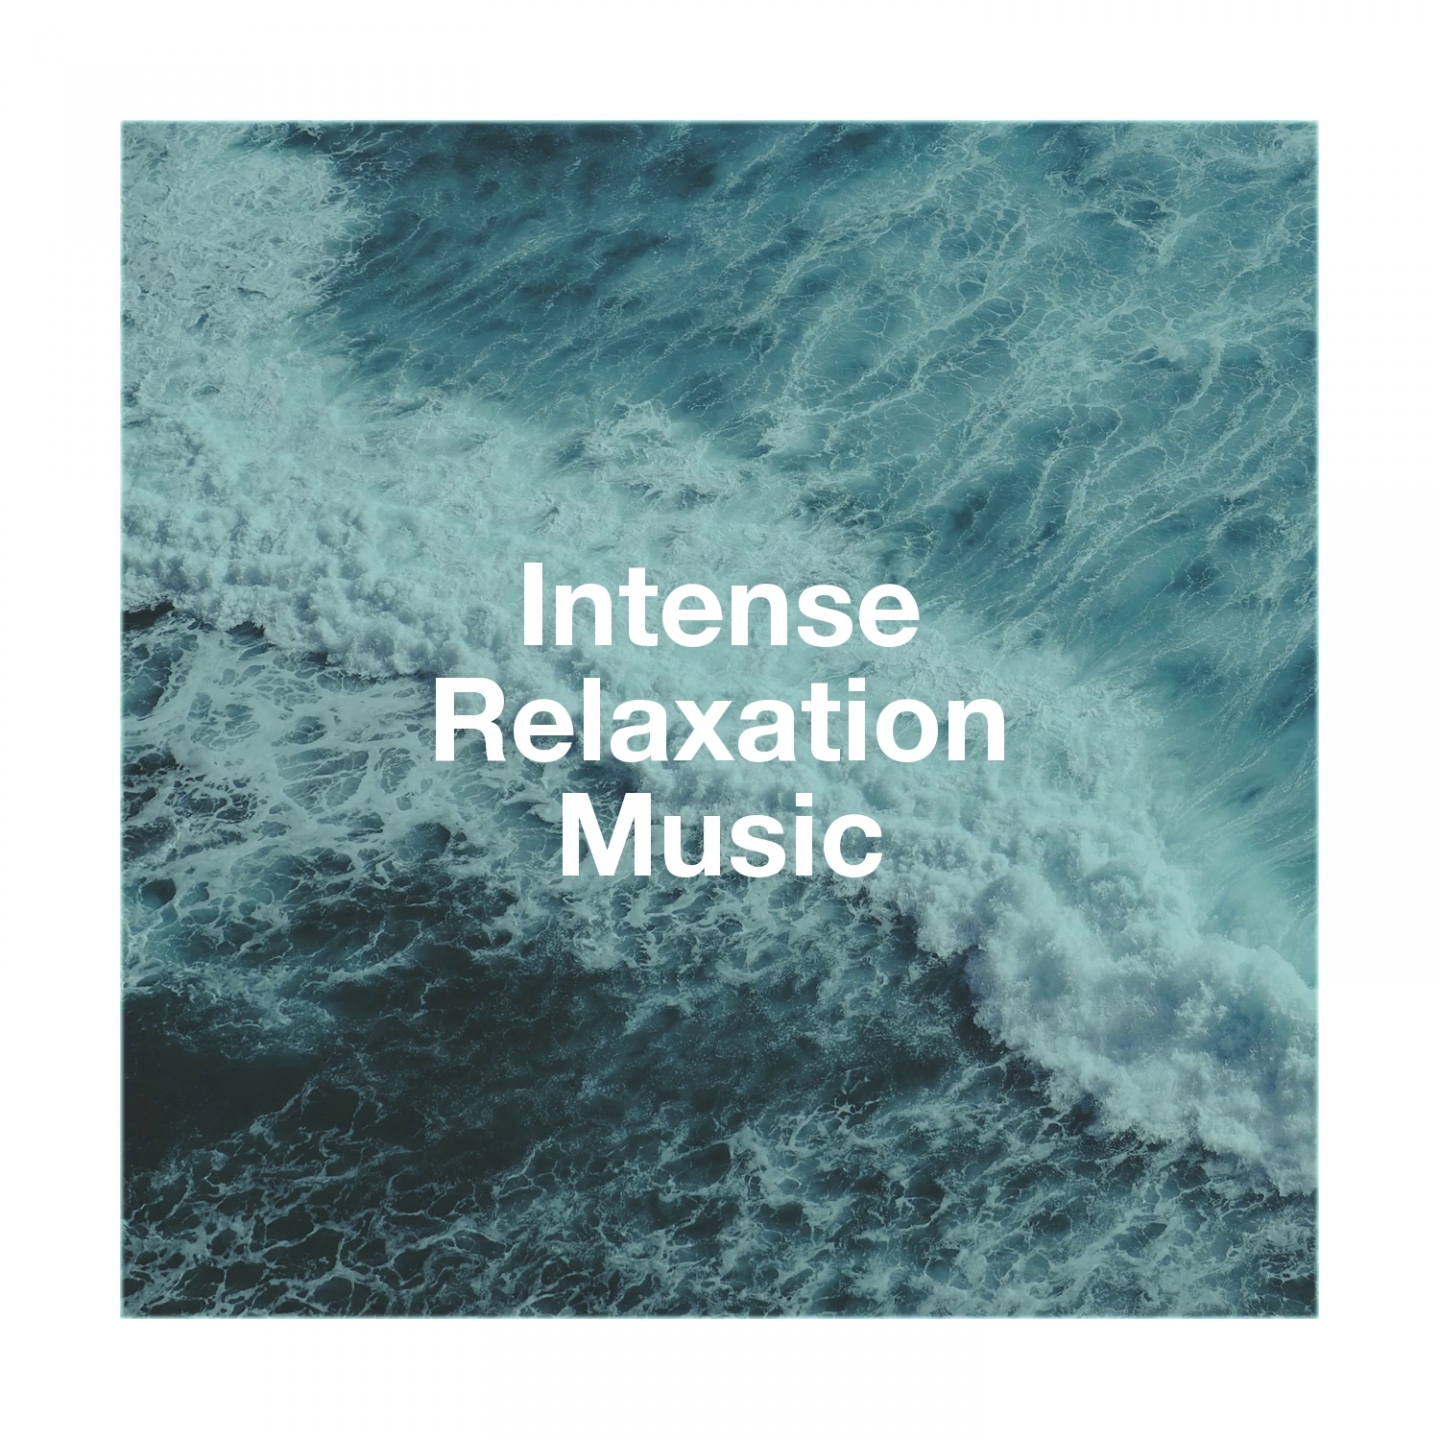 Intense relaxation music